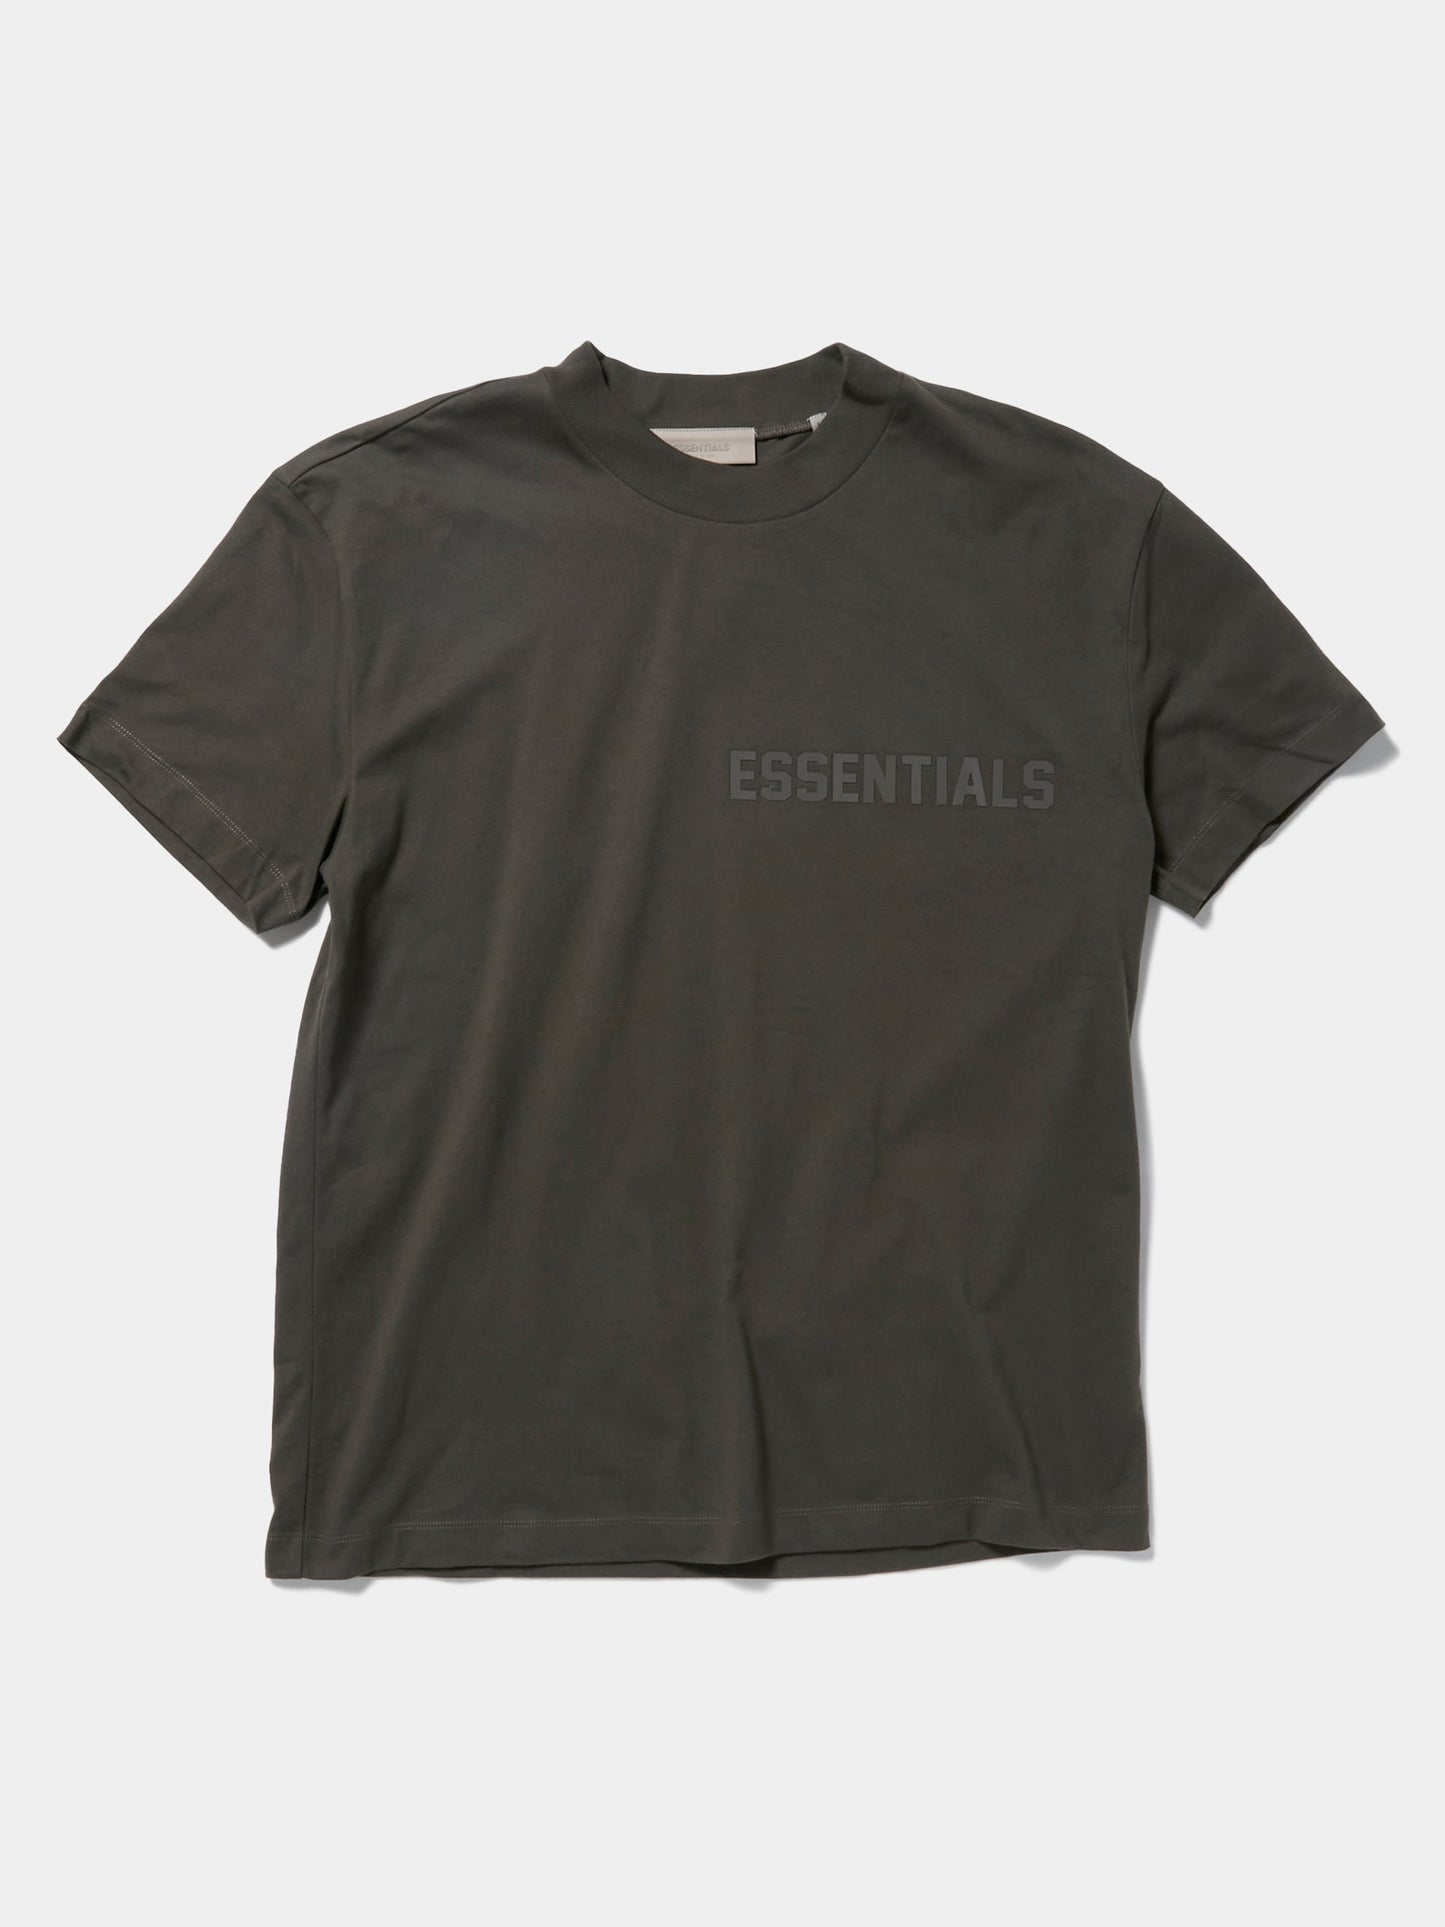 Buy Essentials Essentials S/S Tee (Off-Black) Online at UNION LOS ANGELES